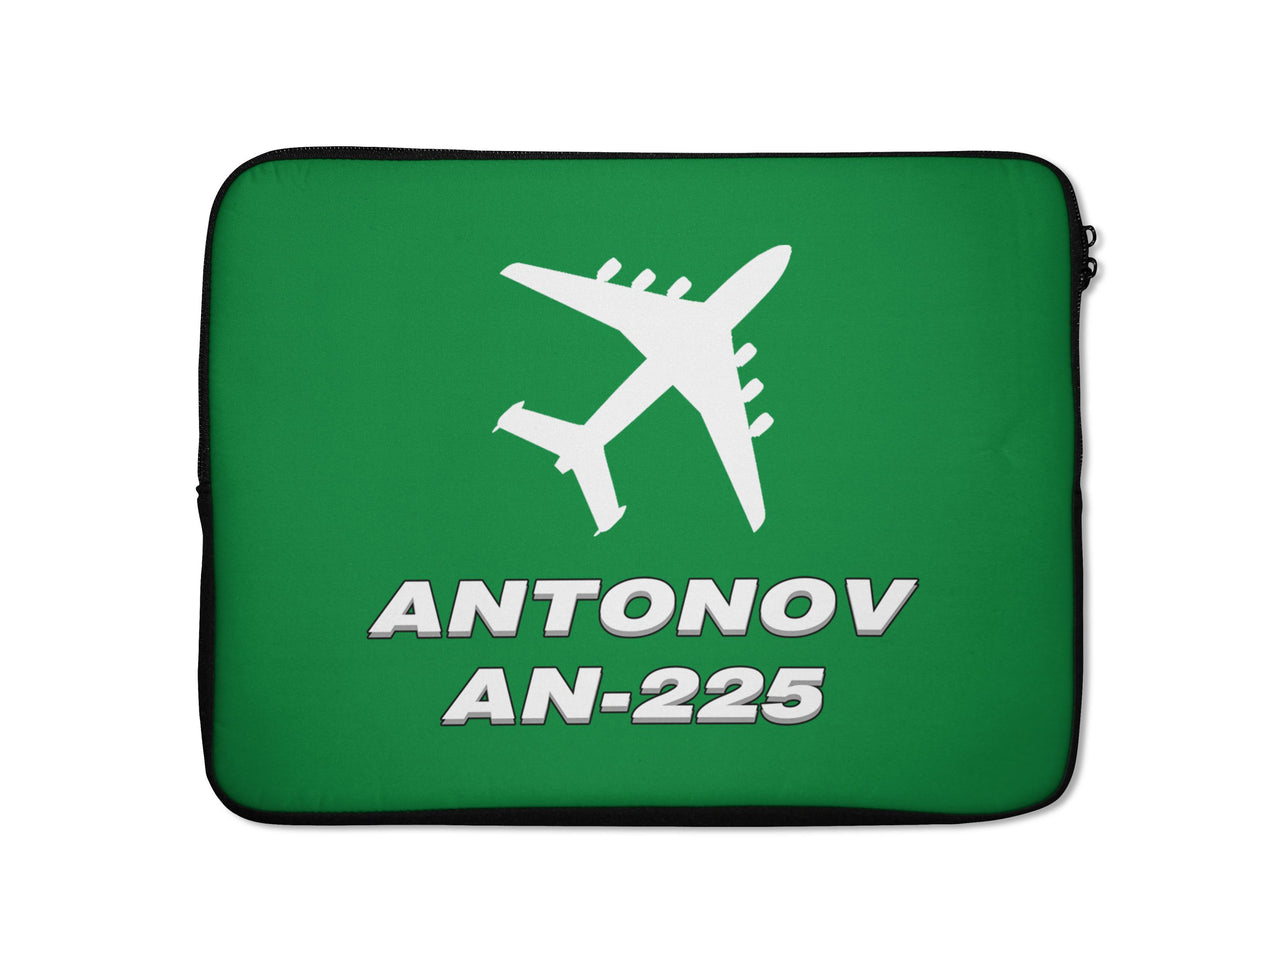 Antonov AN-225 (28) Designed Laptop & Tablet Cases